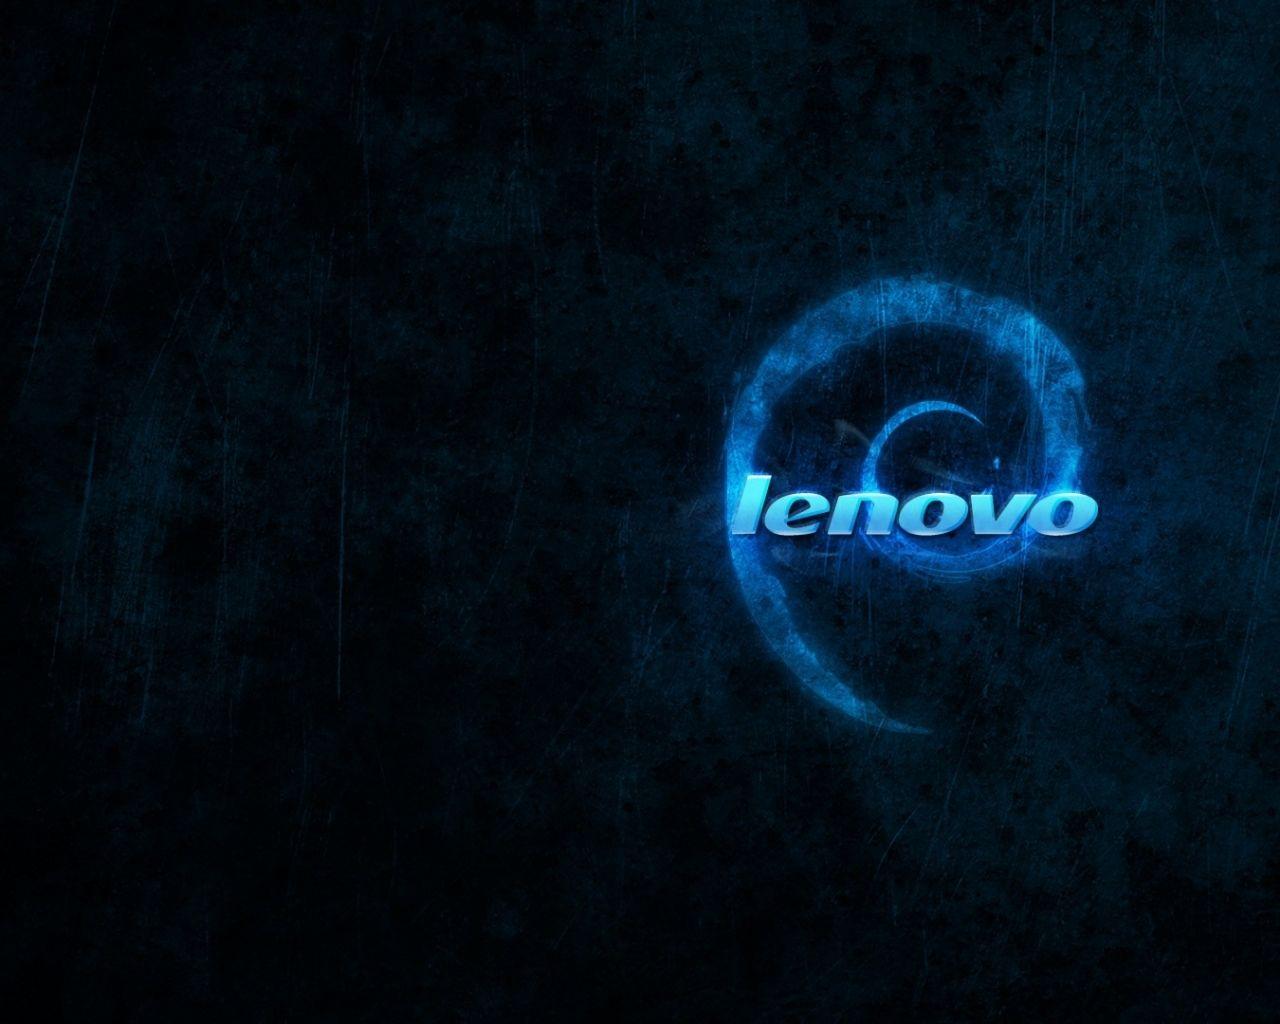 Lenovo Tablet Wallpapers